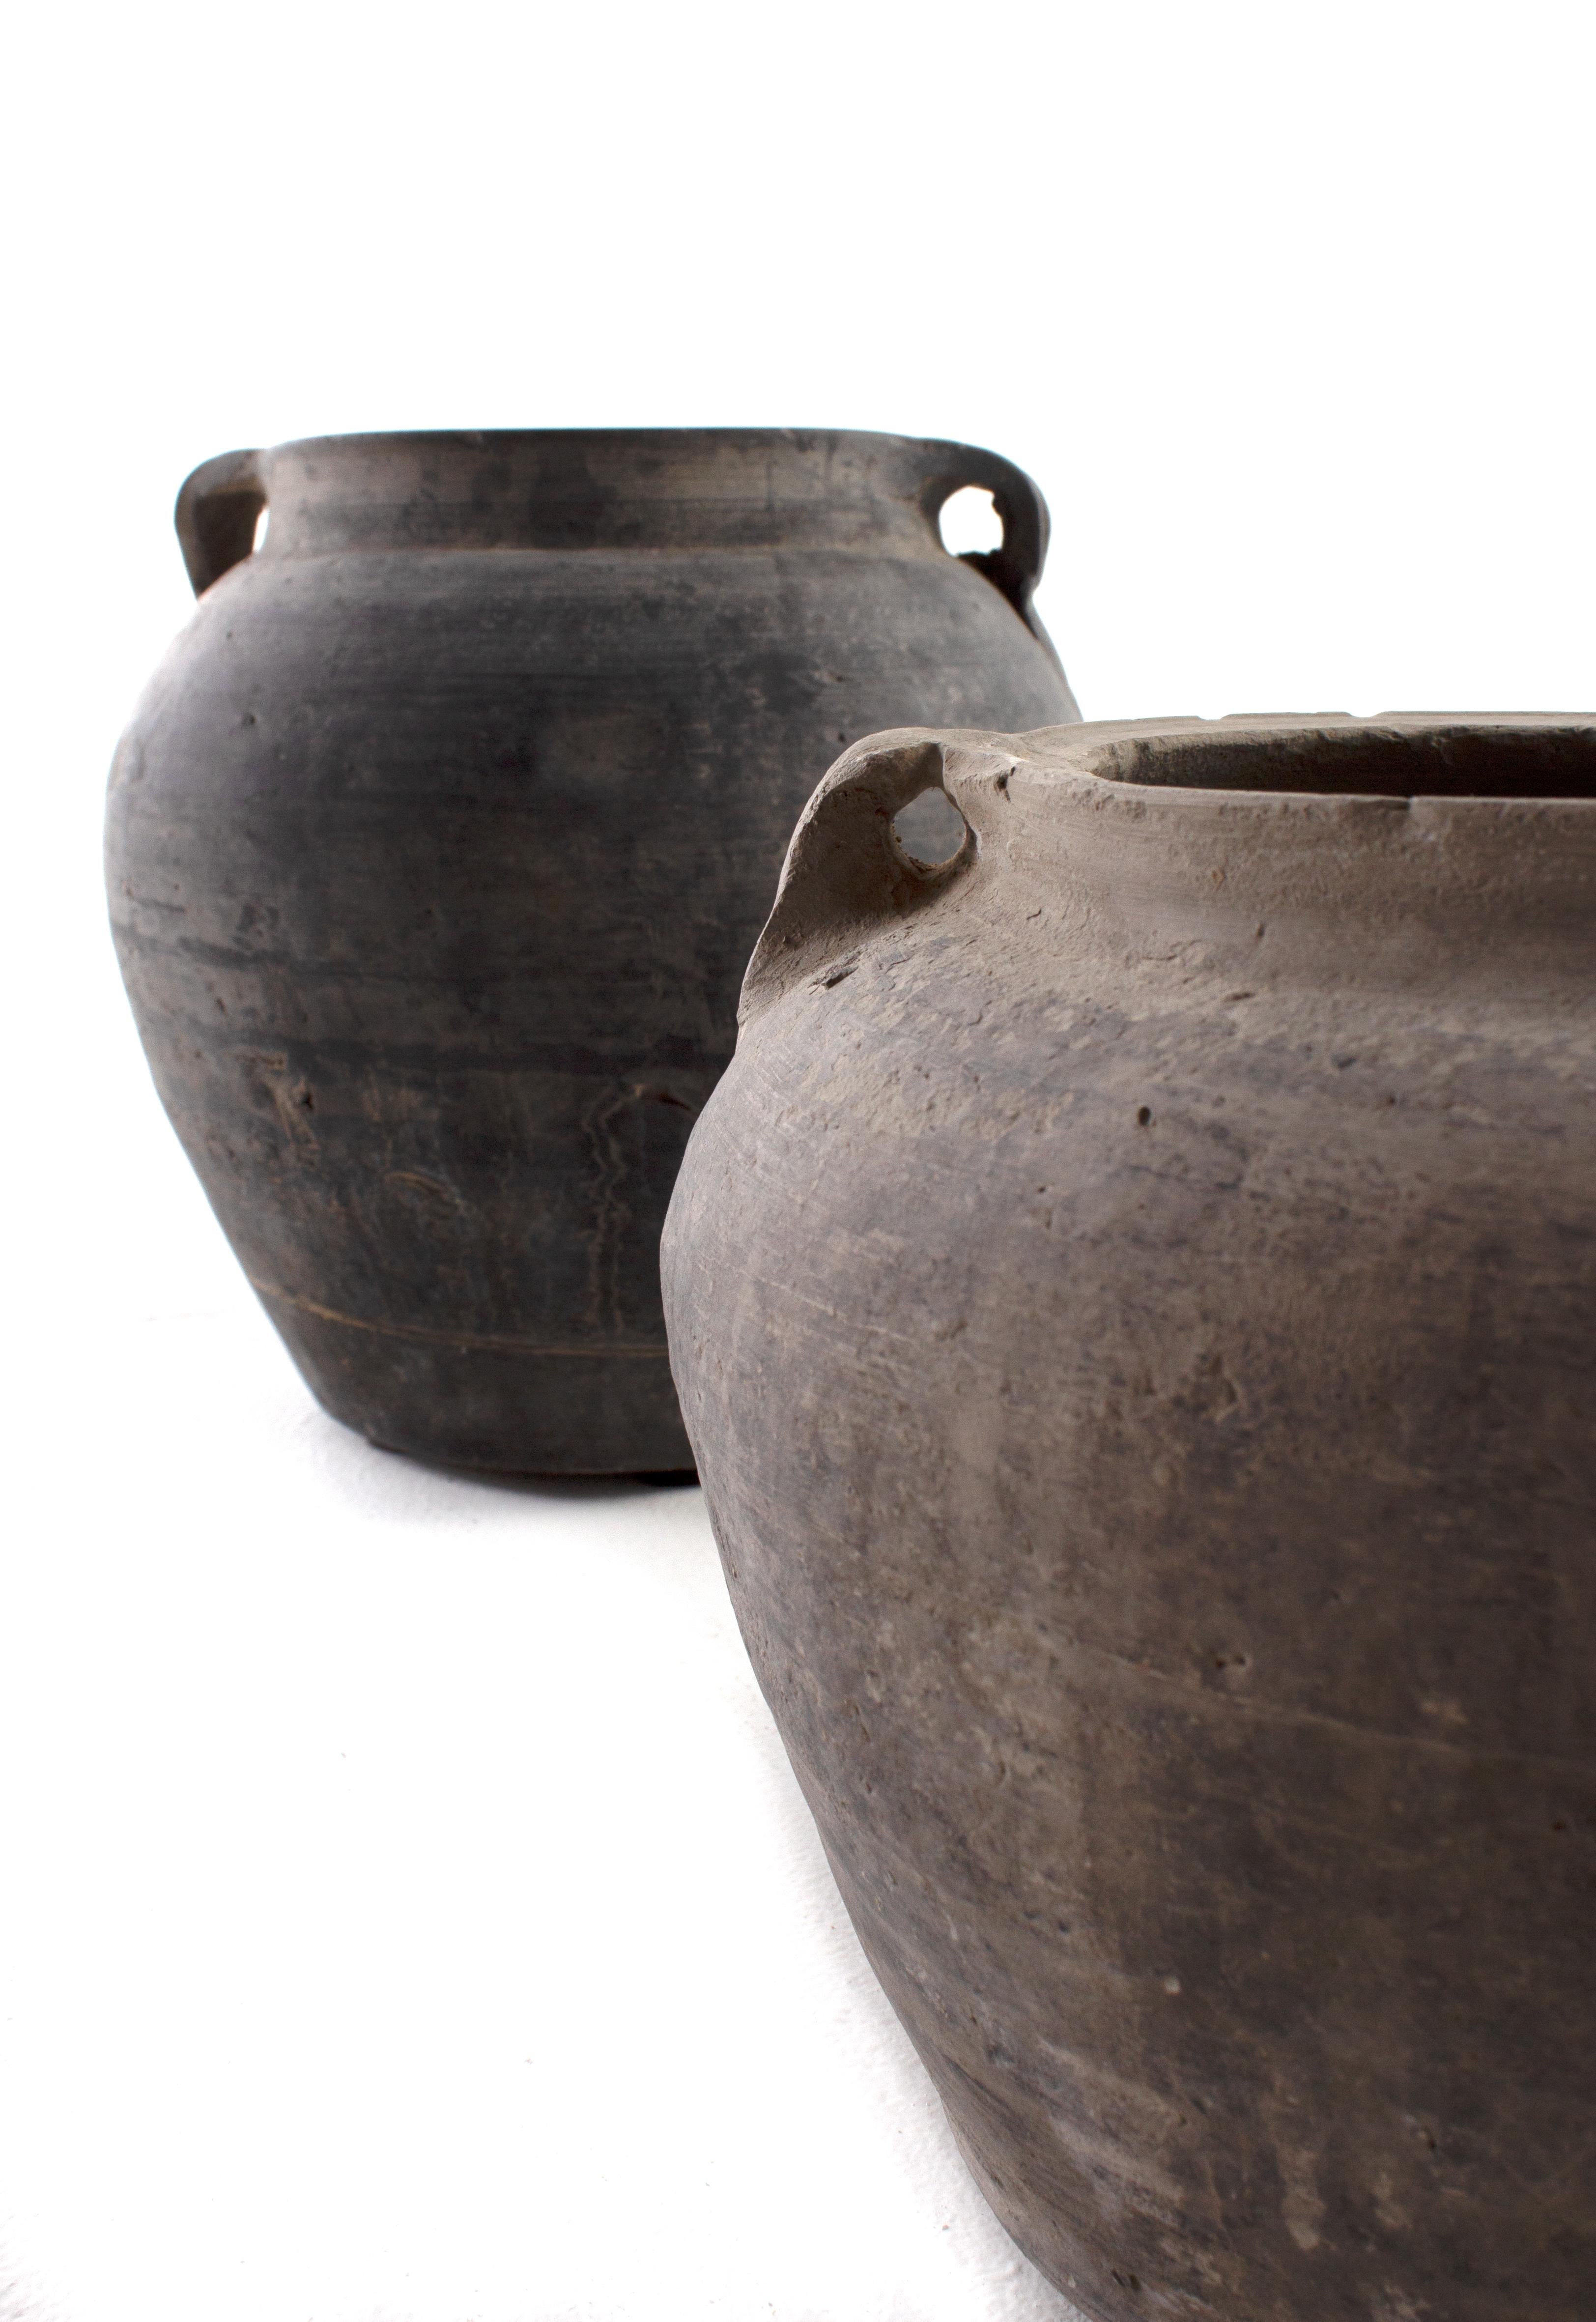 Small ceramic pot.